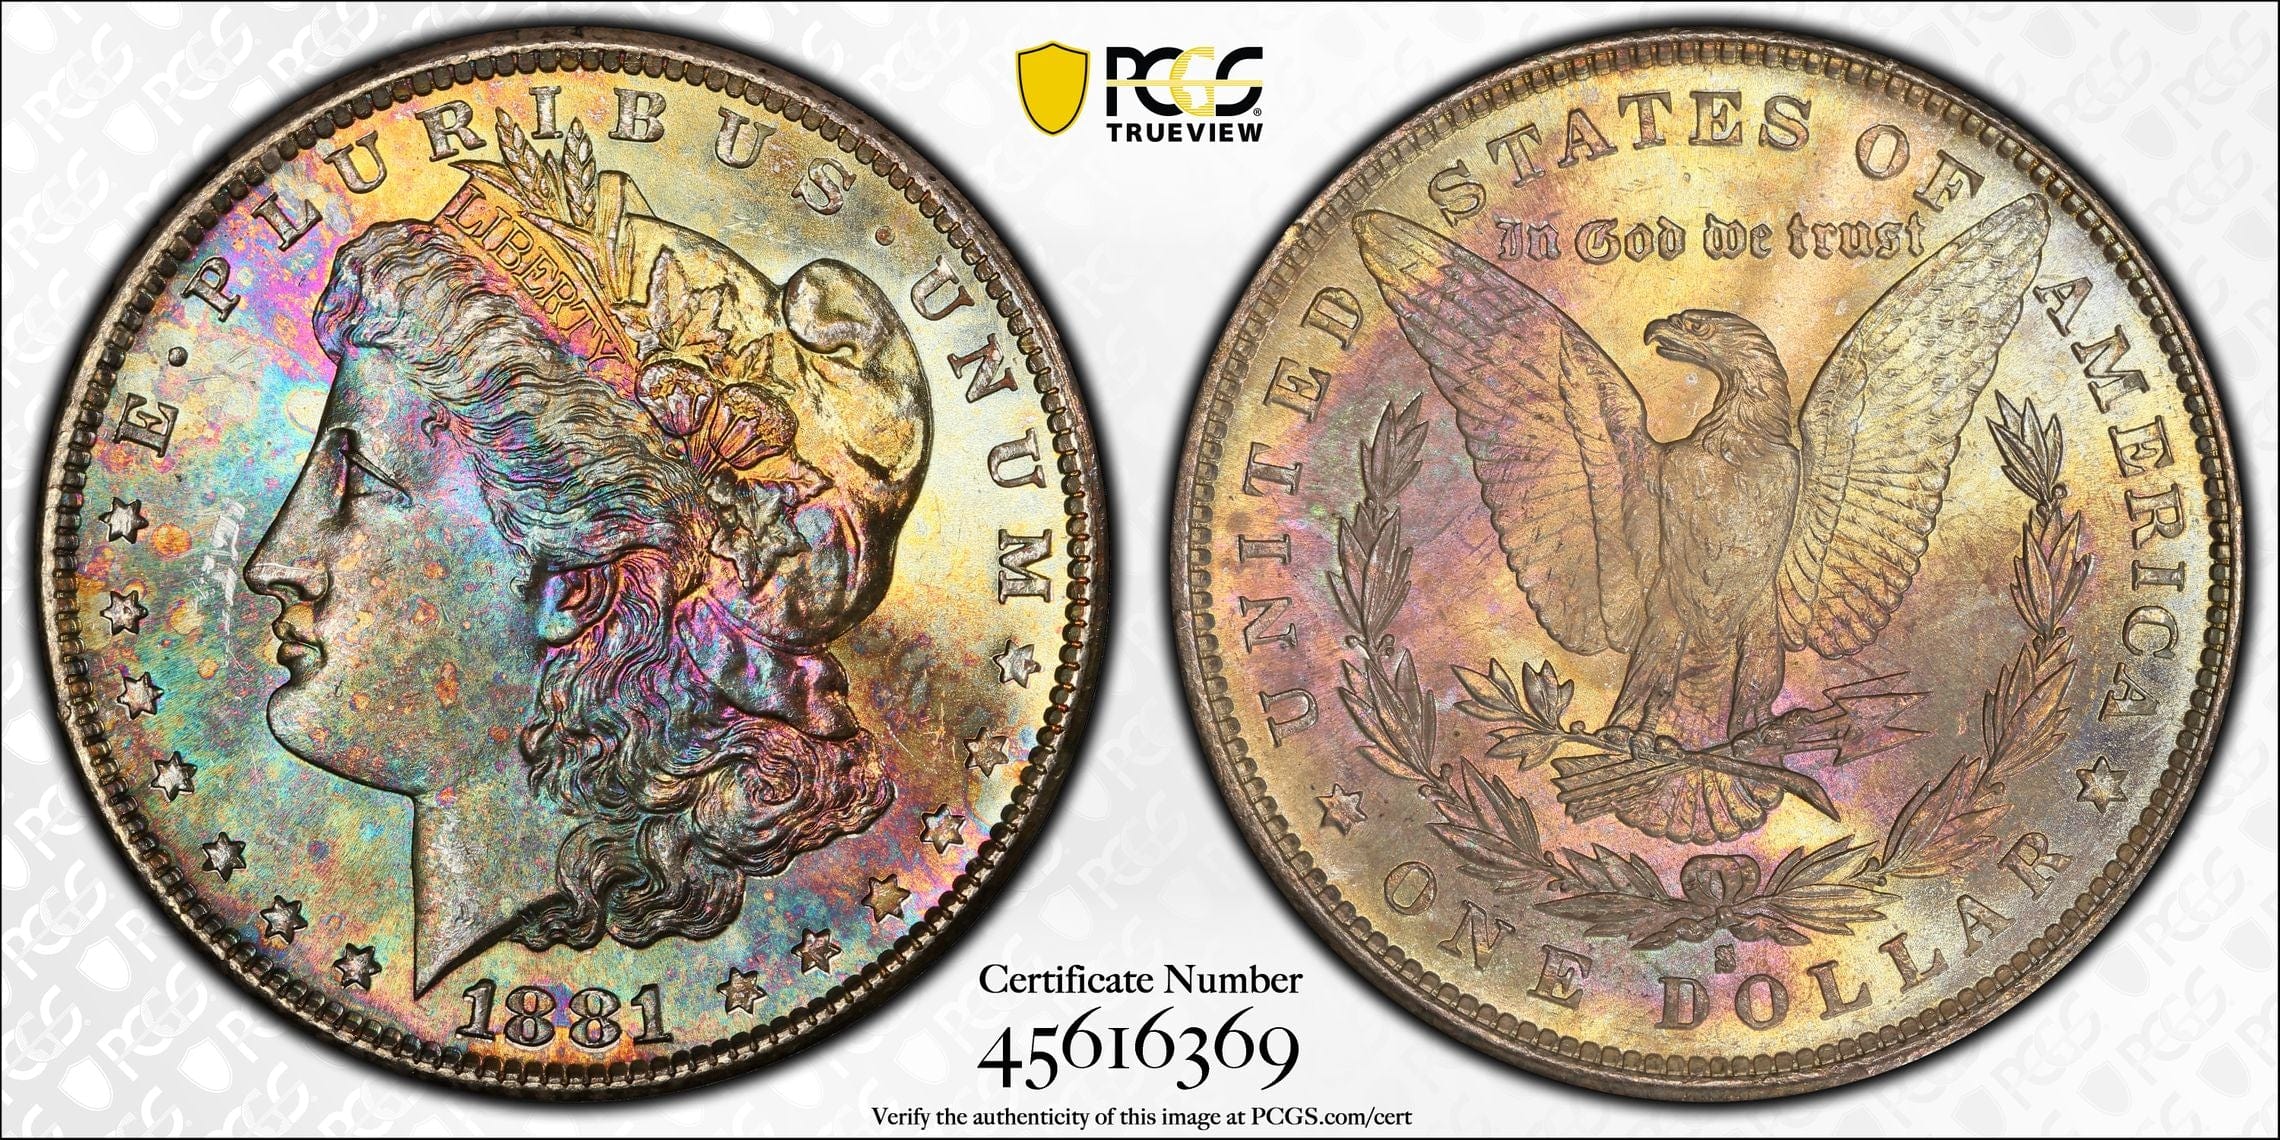 PCGS NGC アンティークコイン 銀貨 モルガンダラー - コレクション